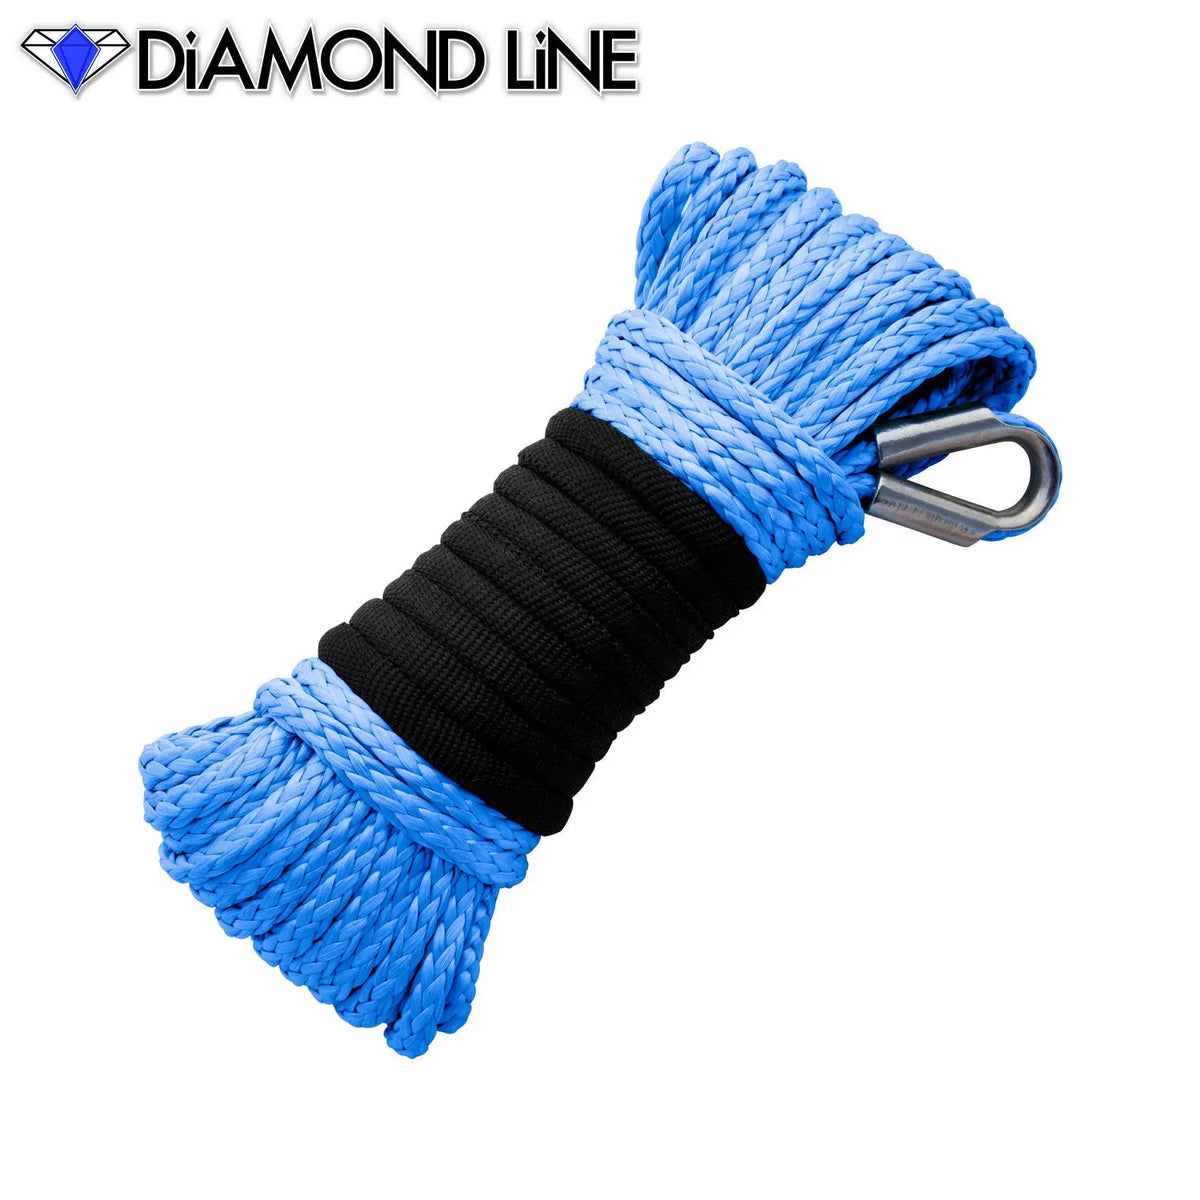 3/16" x 50' Diamond Line Winch Rope Mainline - Blue.